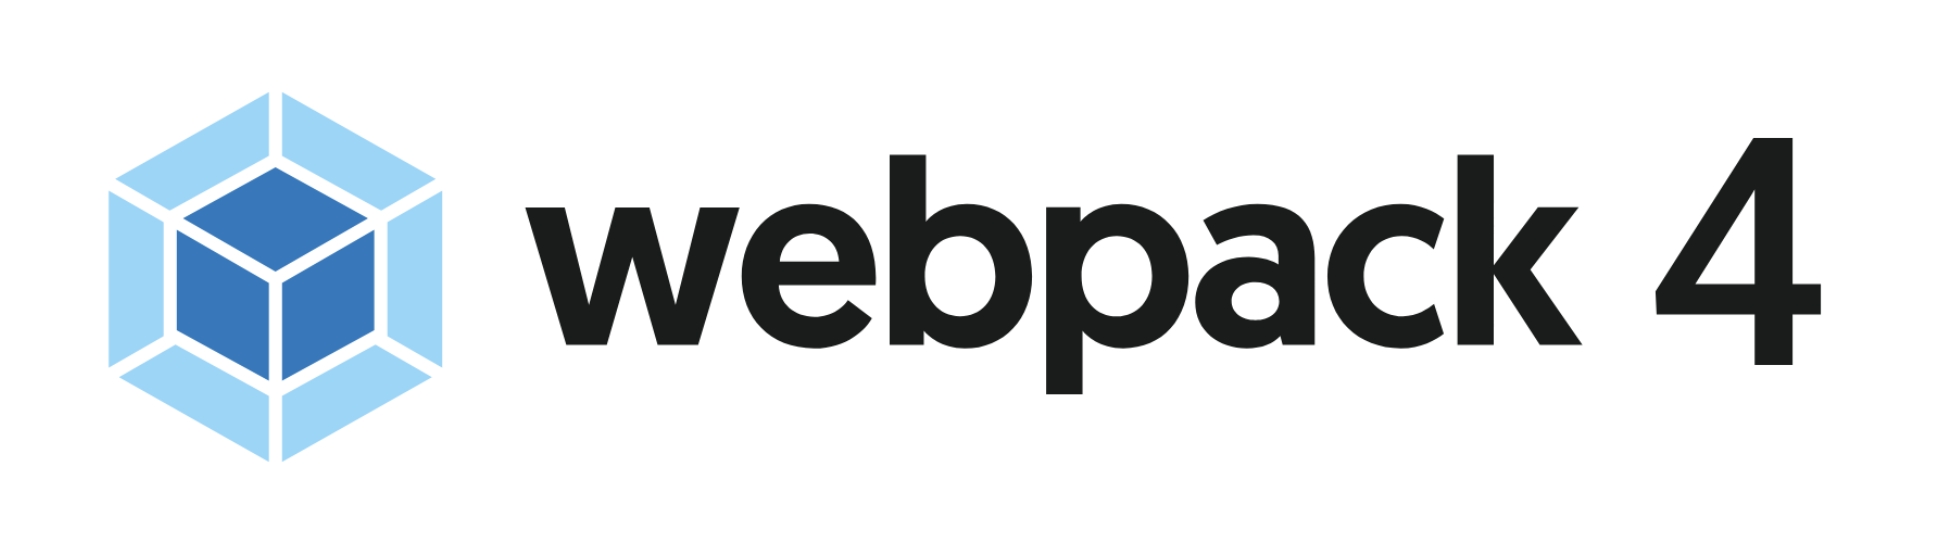 Webpack 4 logo - JavaScript module bundler